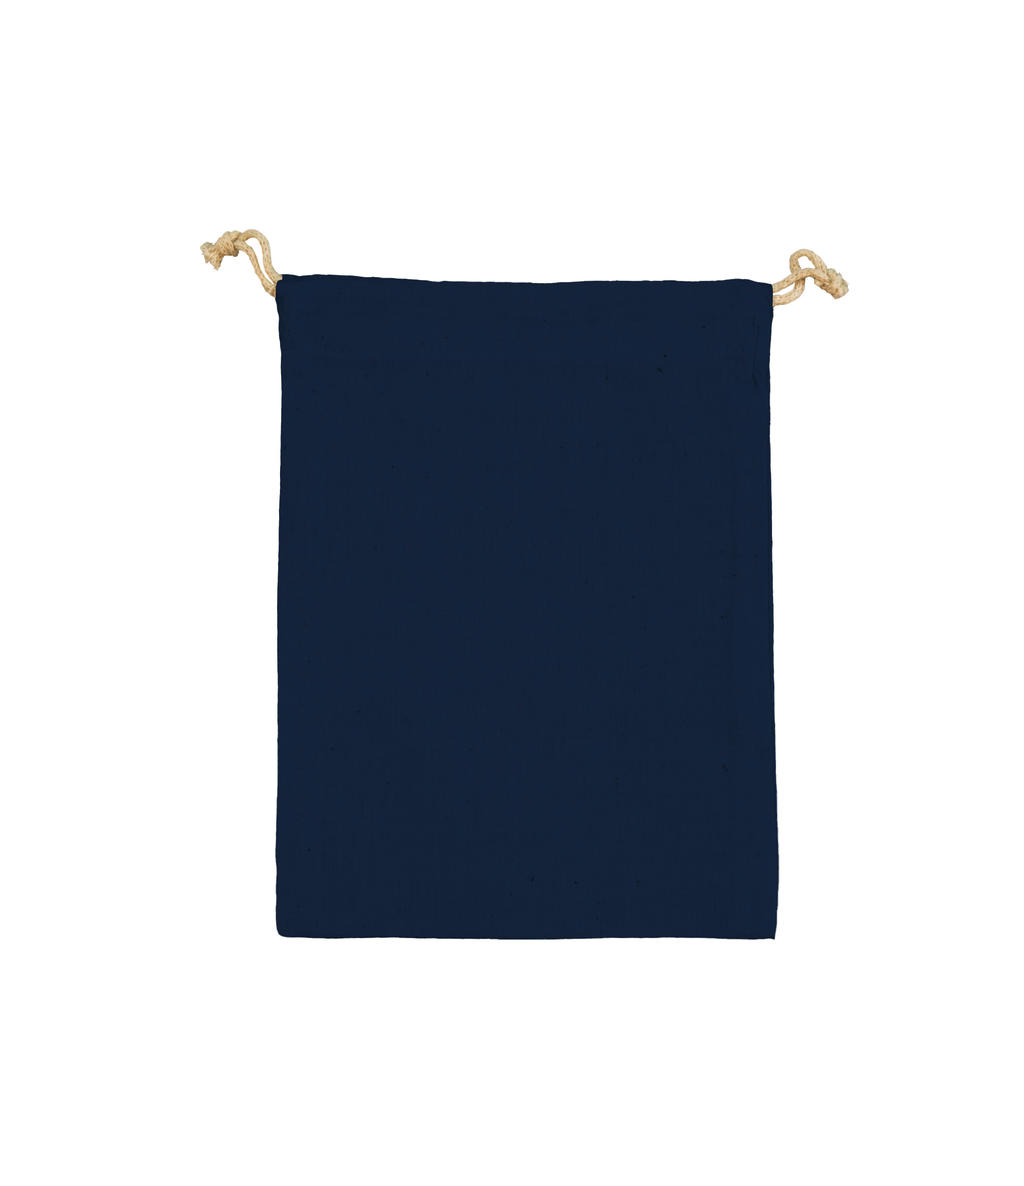  Bag with Drawstring Mini in Farbe Dark Blue